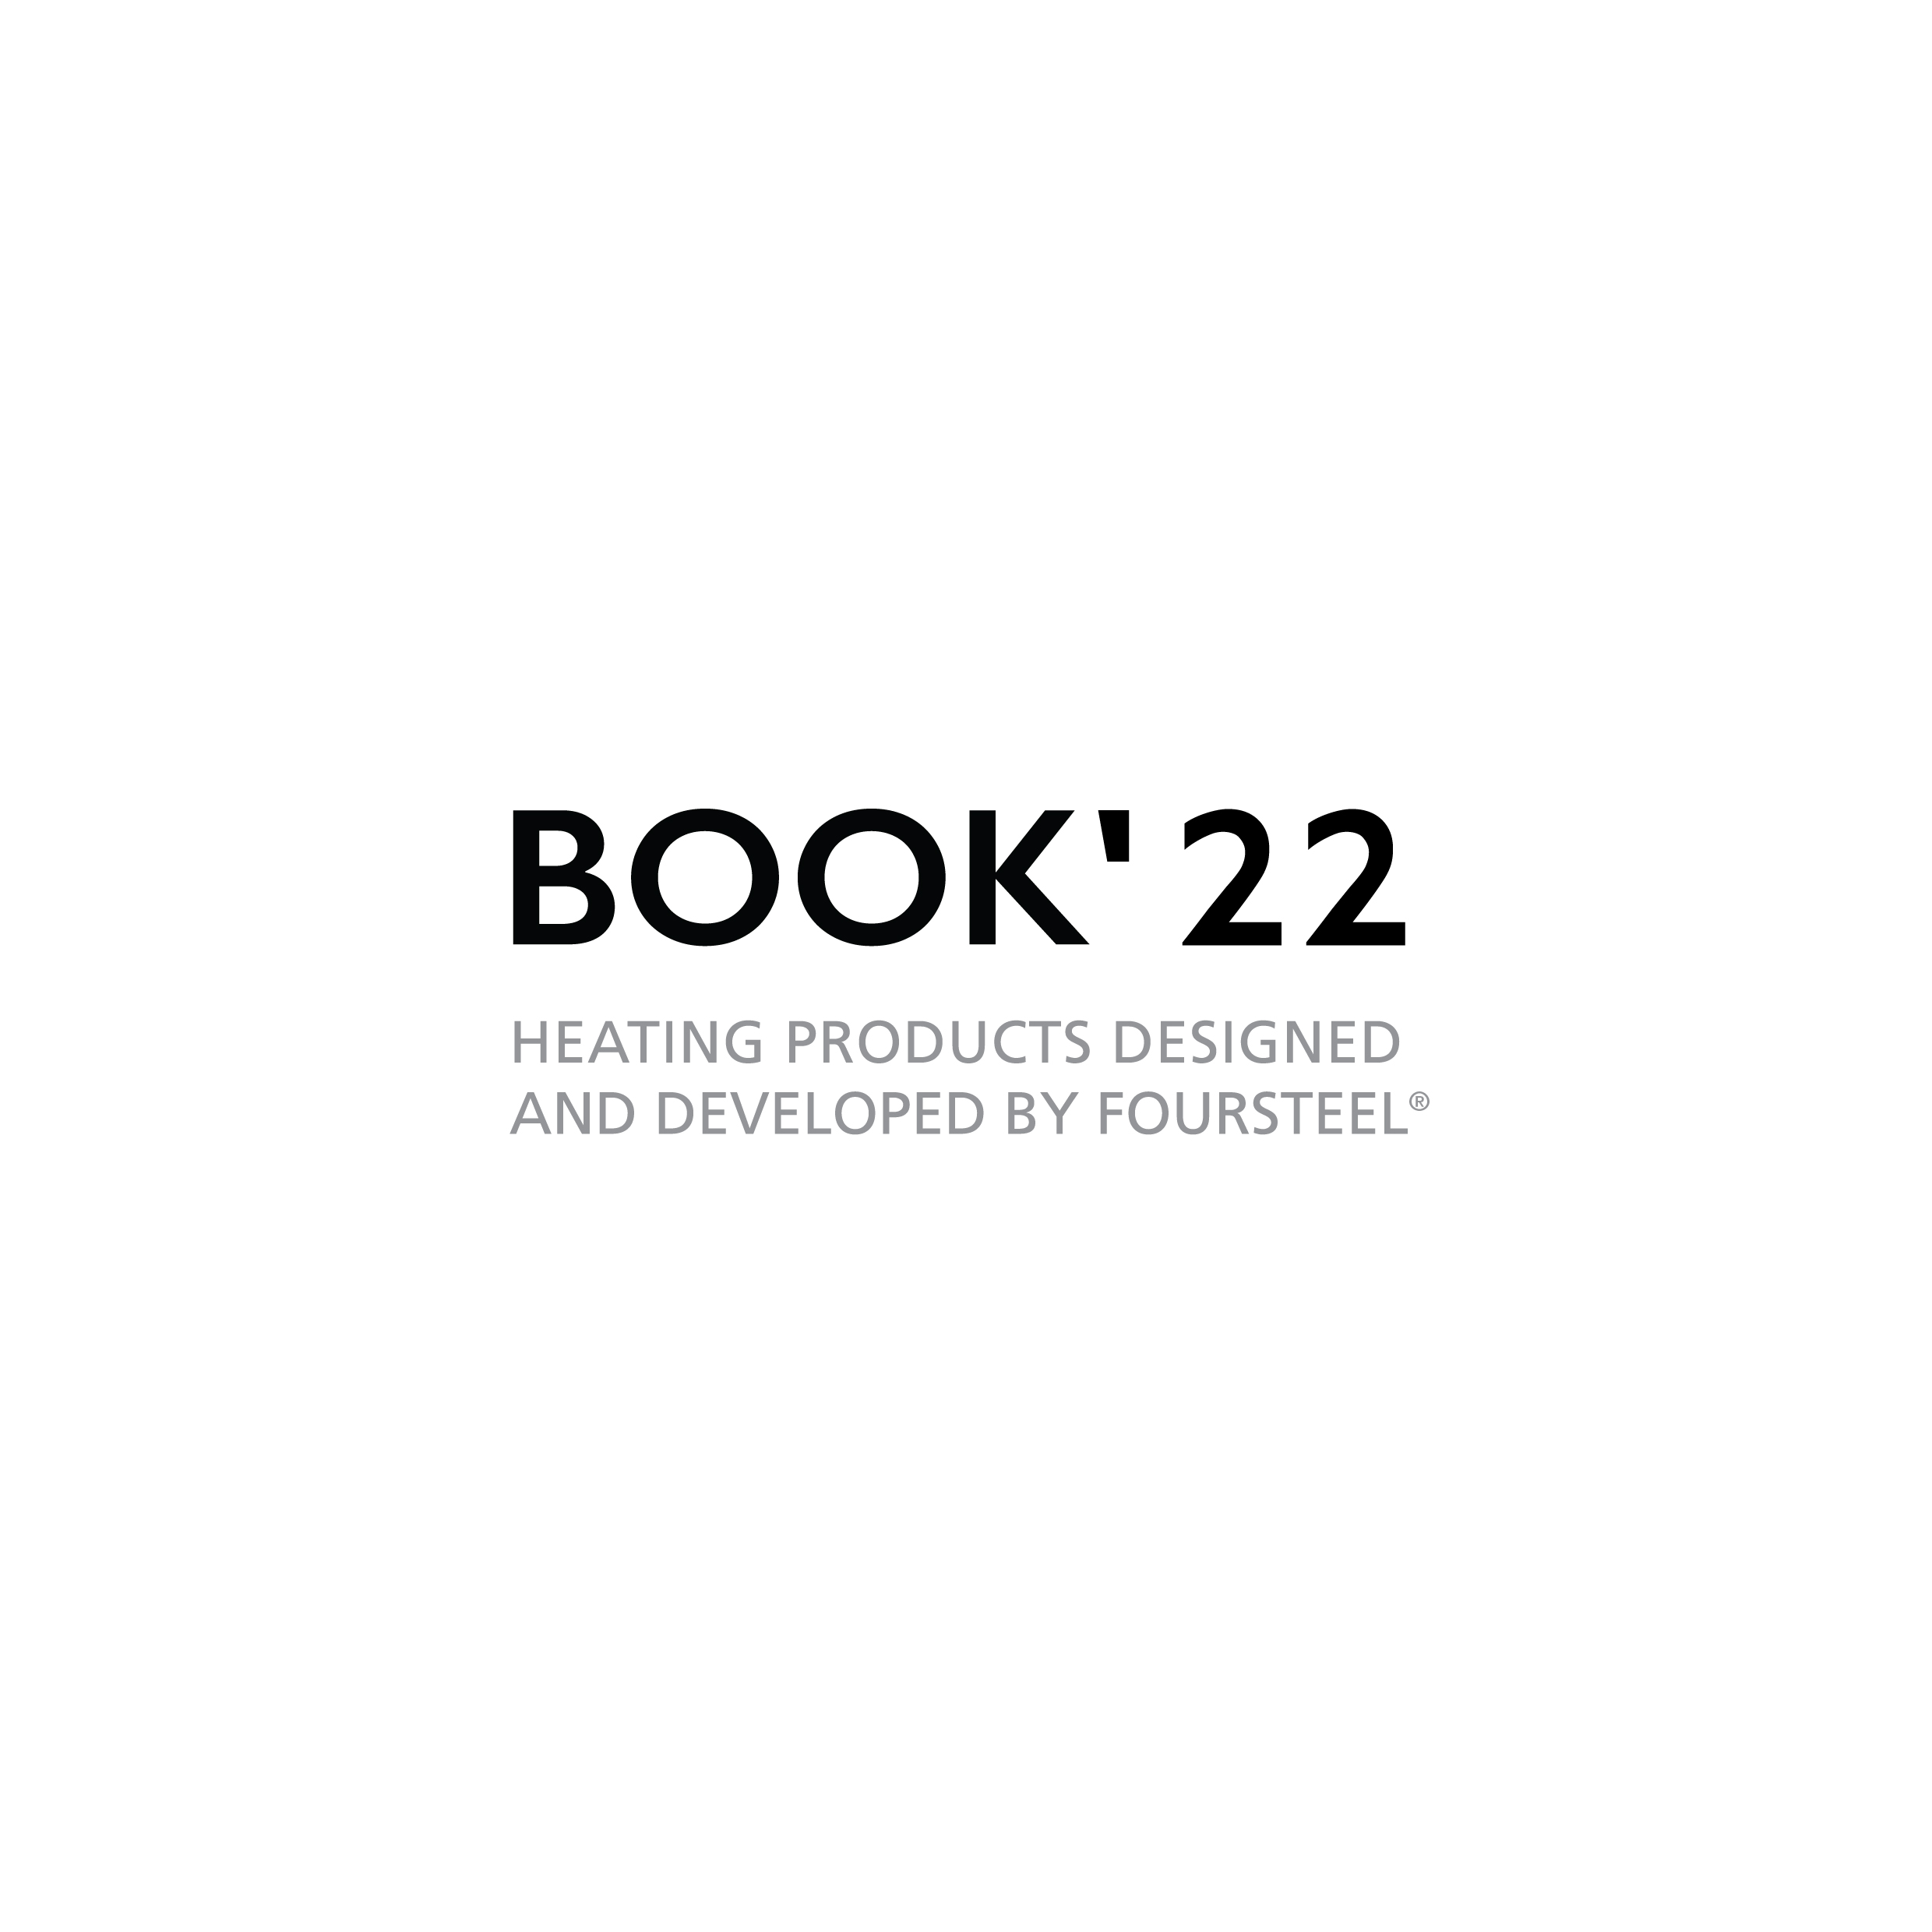 BOOK 2022 EUROPE